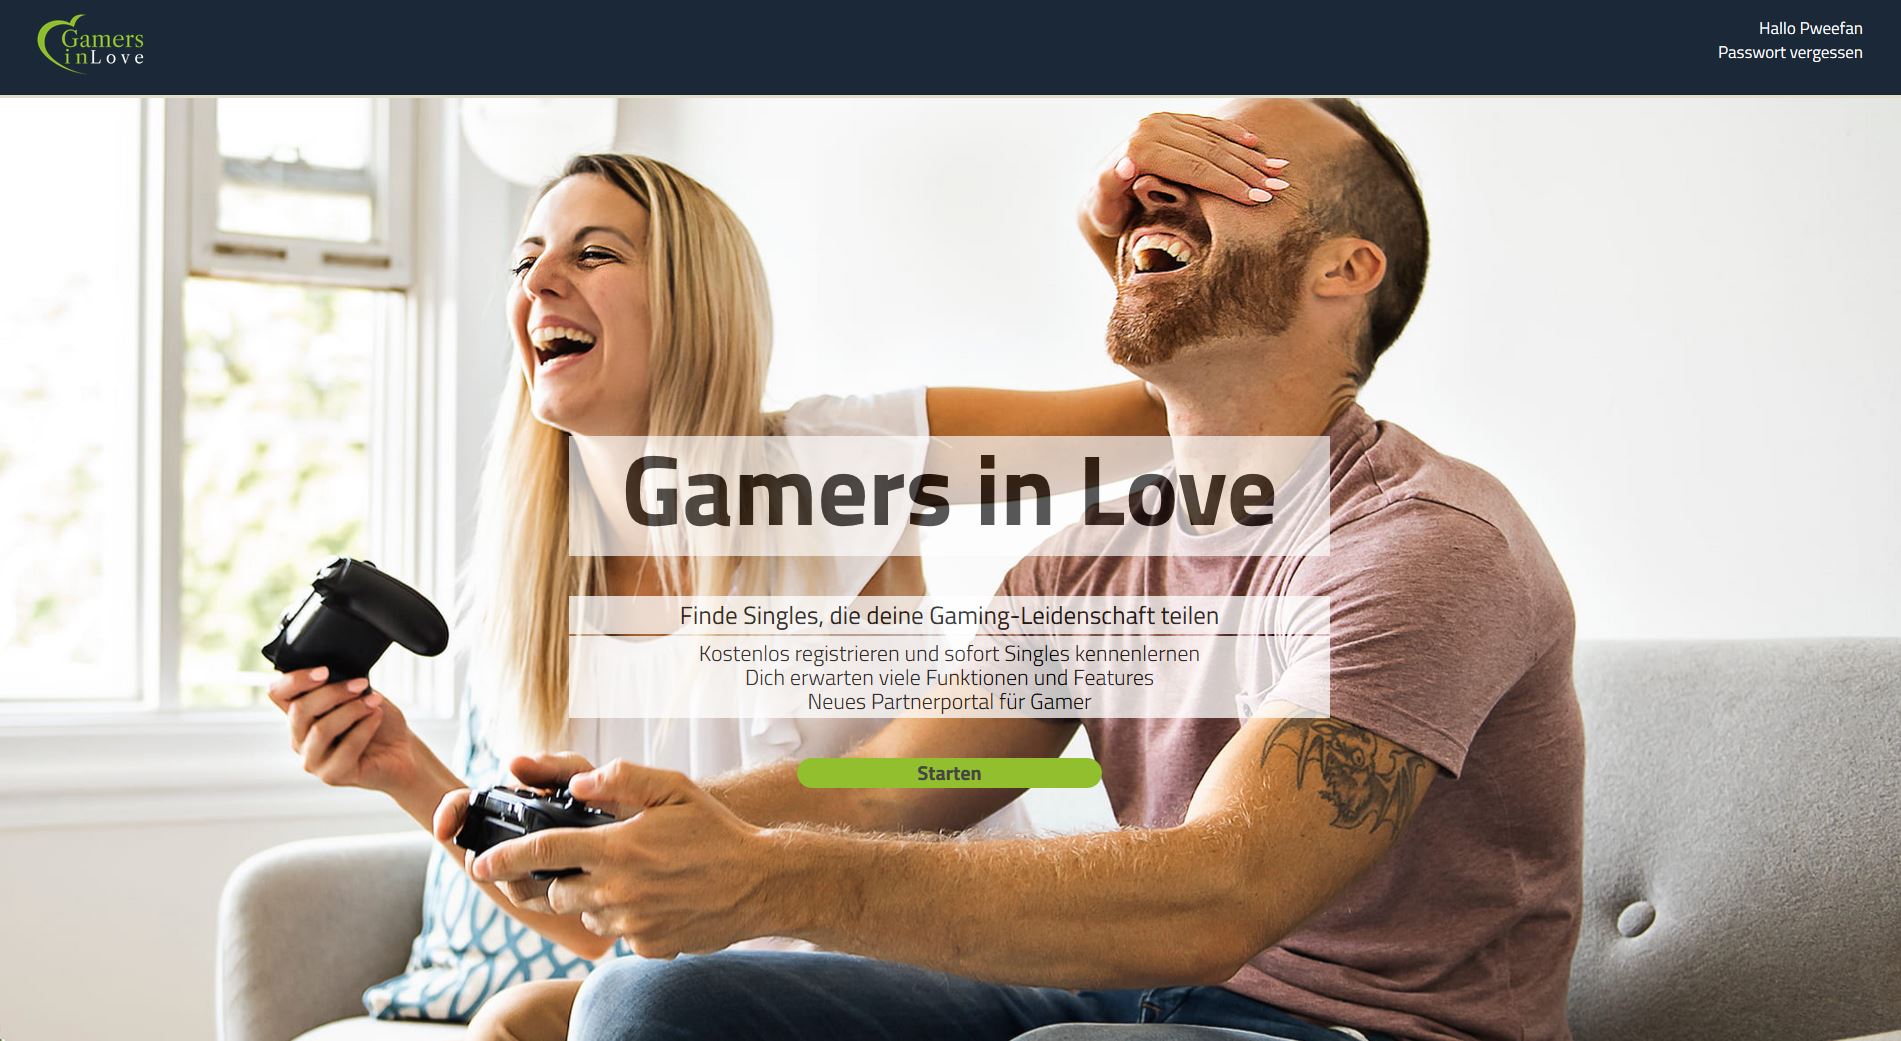 Gamer auf Partnersuche autogenitrening.com